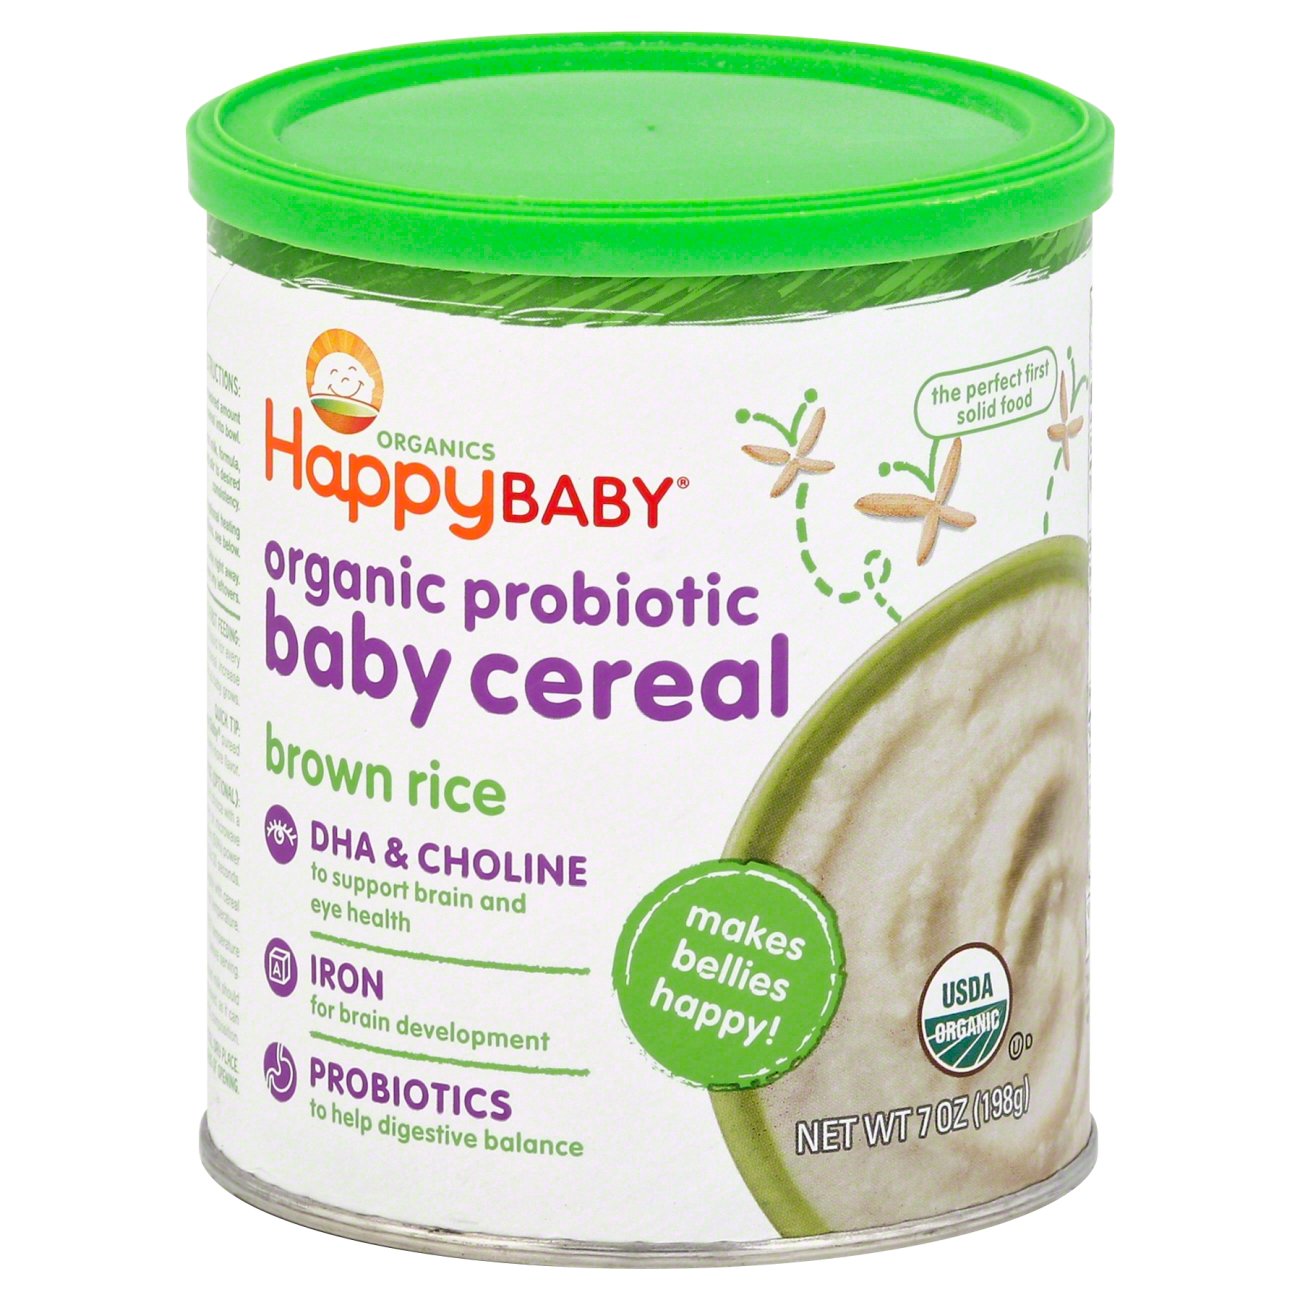 Happy Baby Brown Rice Organic Probiotic Baby Cereal Shop